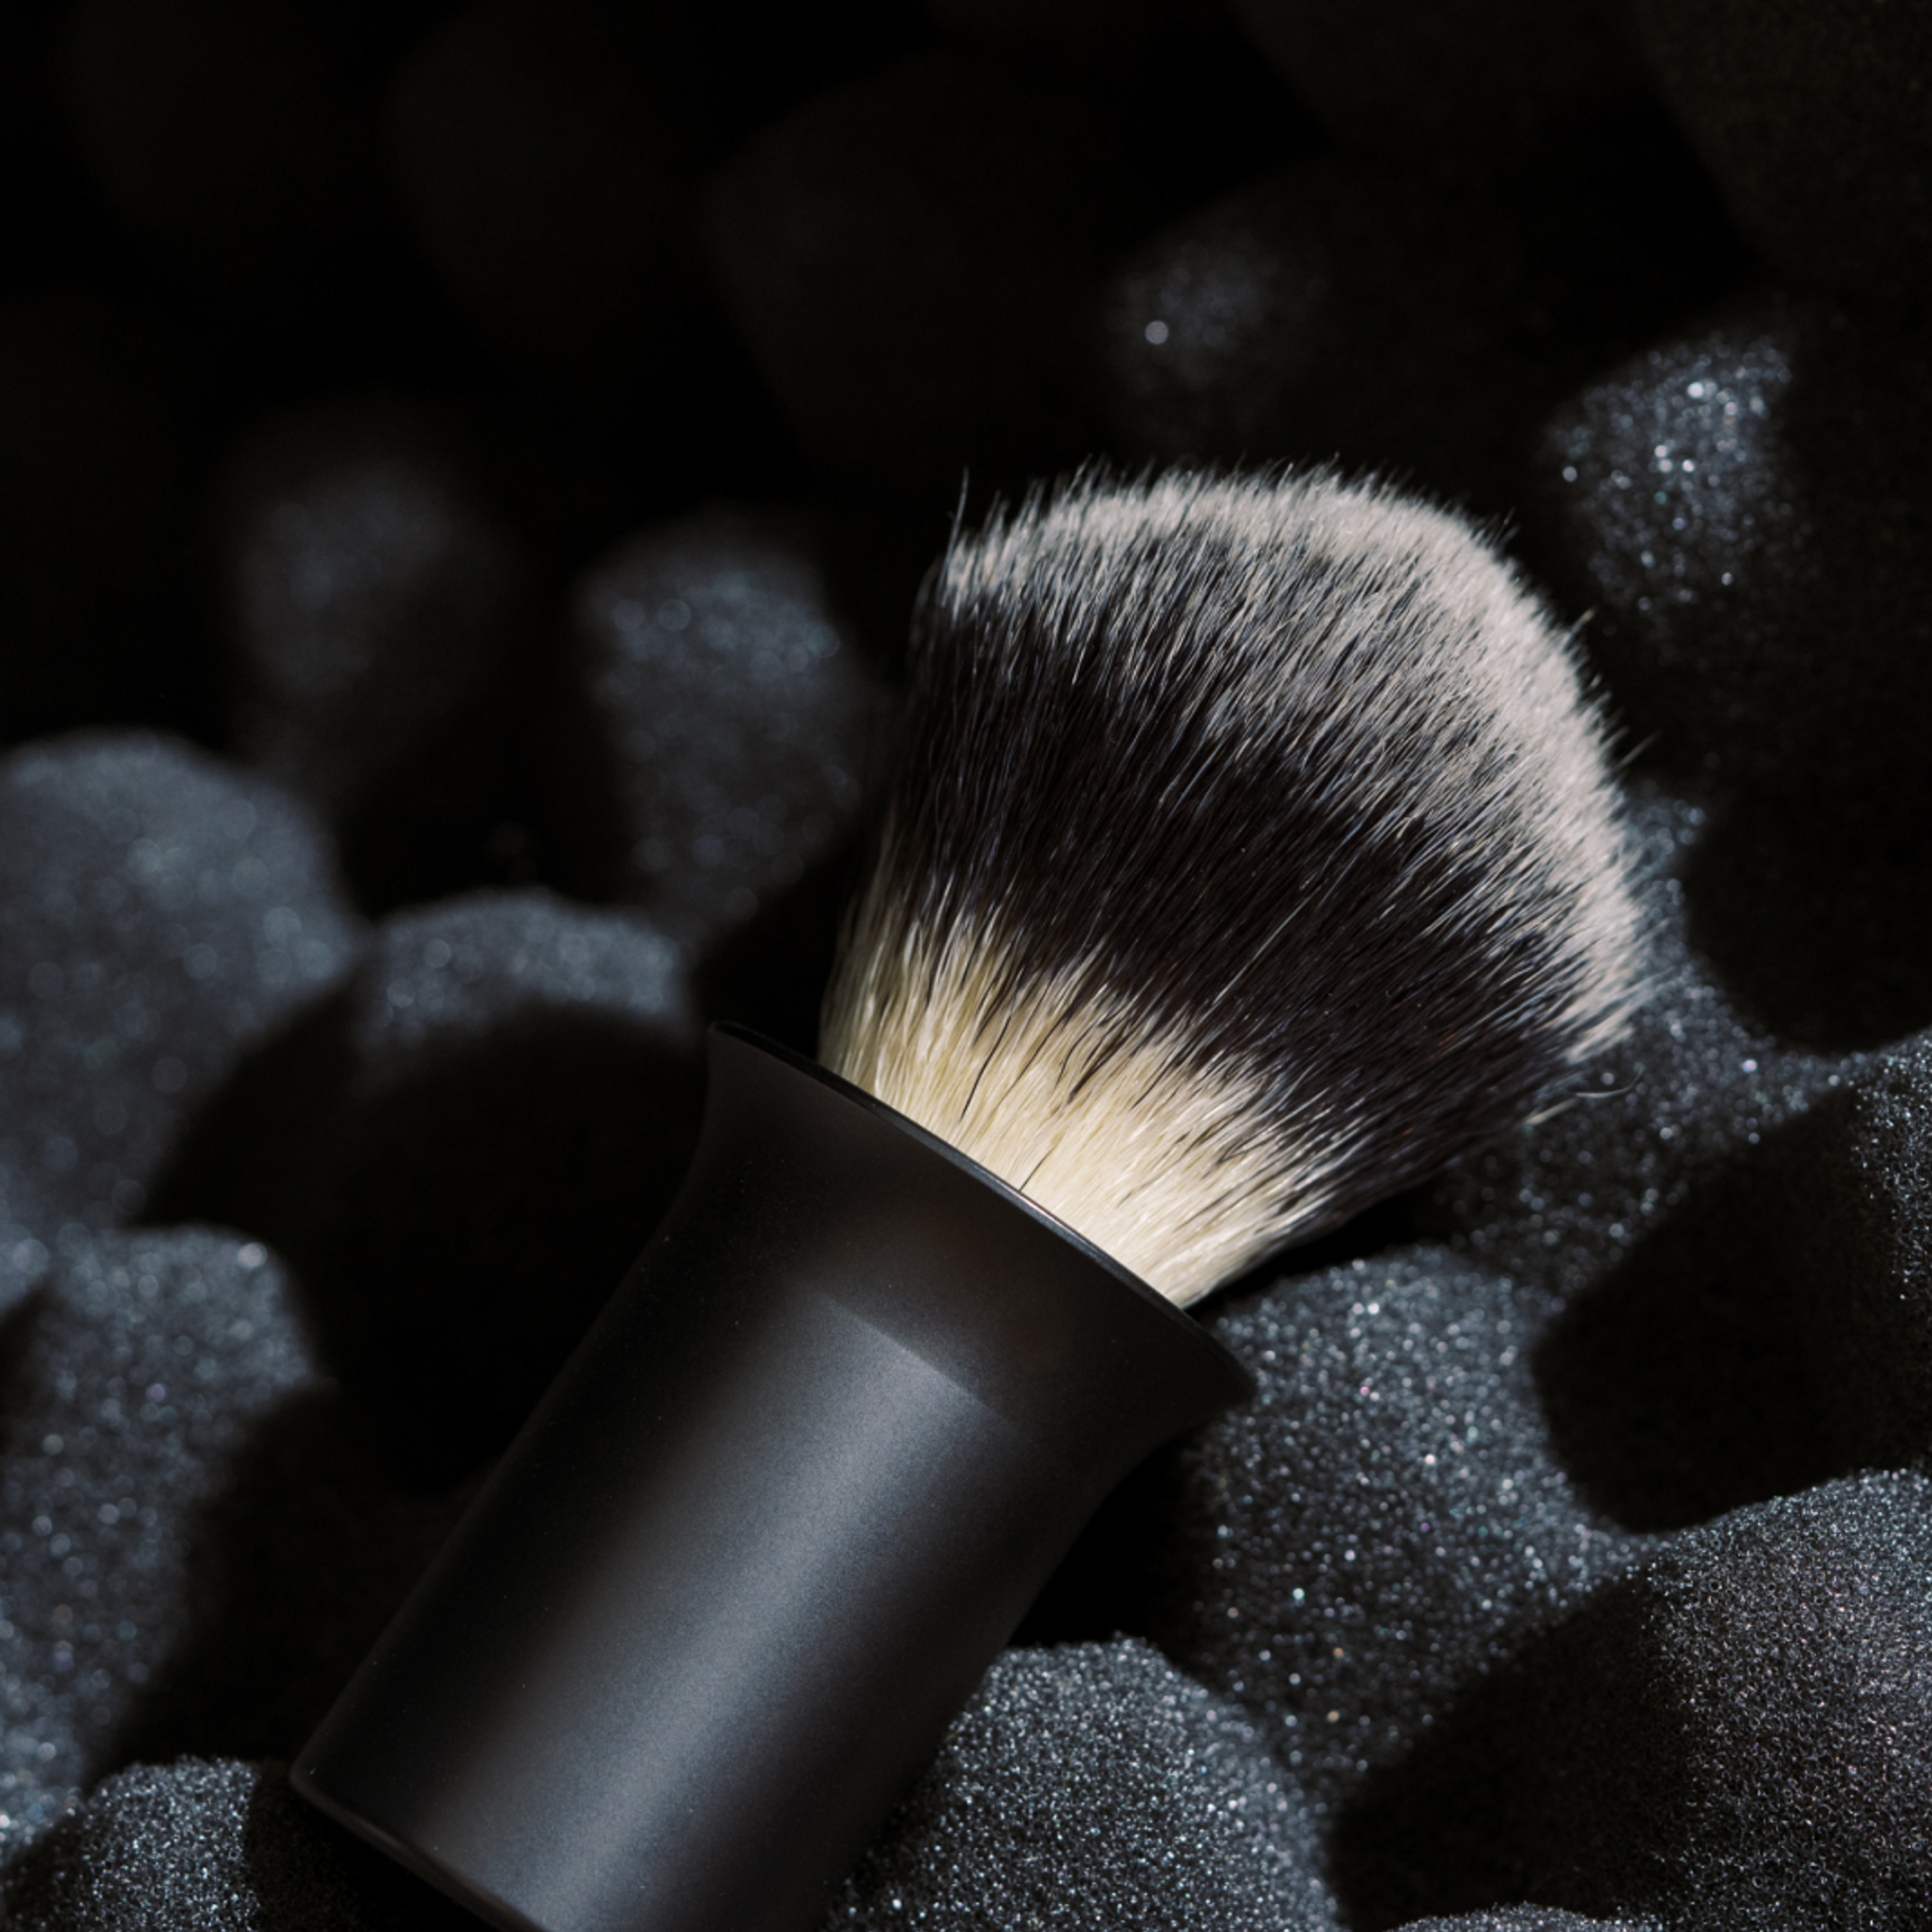 Silvertip Synthetic Shaving Brush